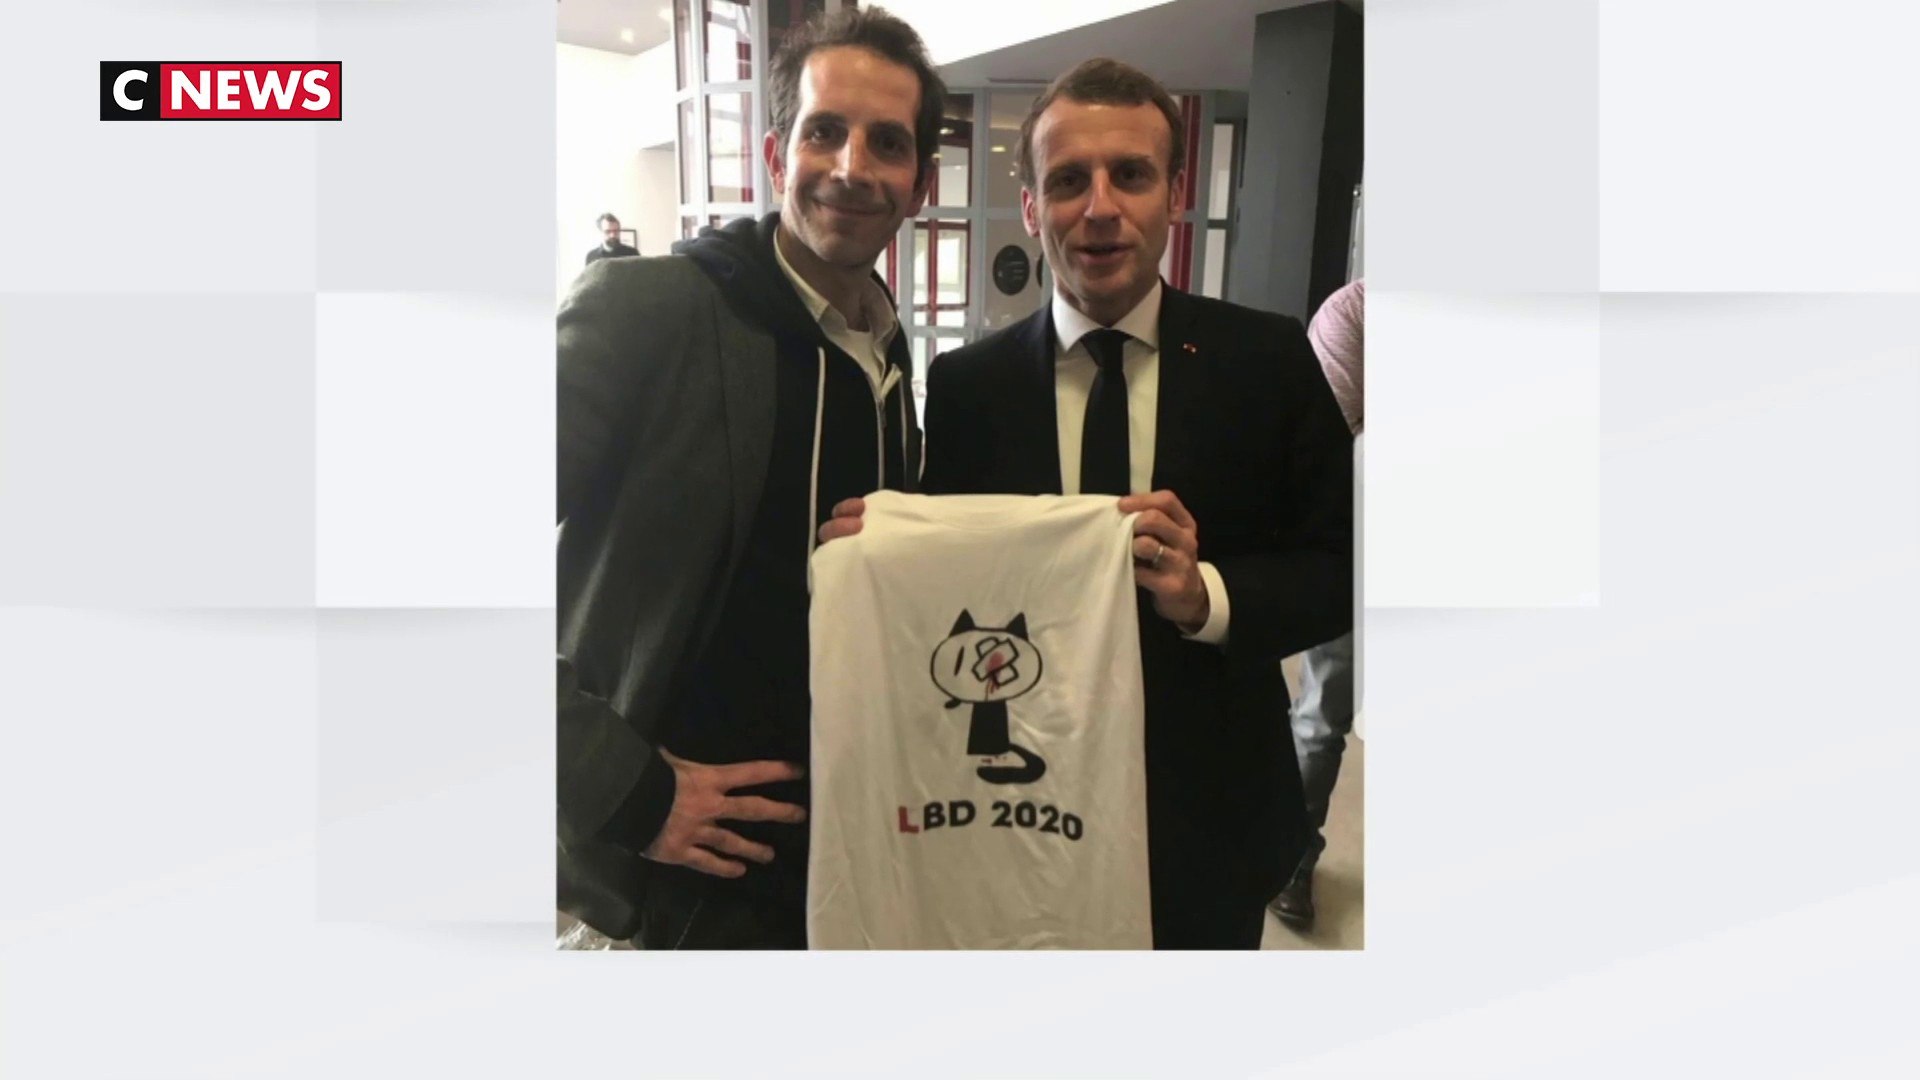 La photo d'Emmanuel Macron tenant un t-shirt anti-LBD provoque la colère  des syndicats - Vidéo Dailymotion